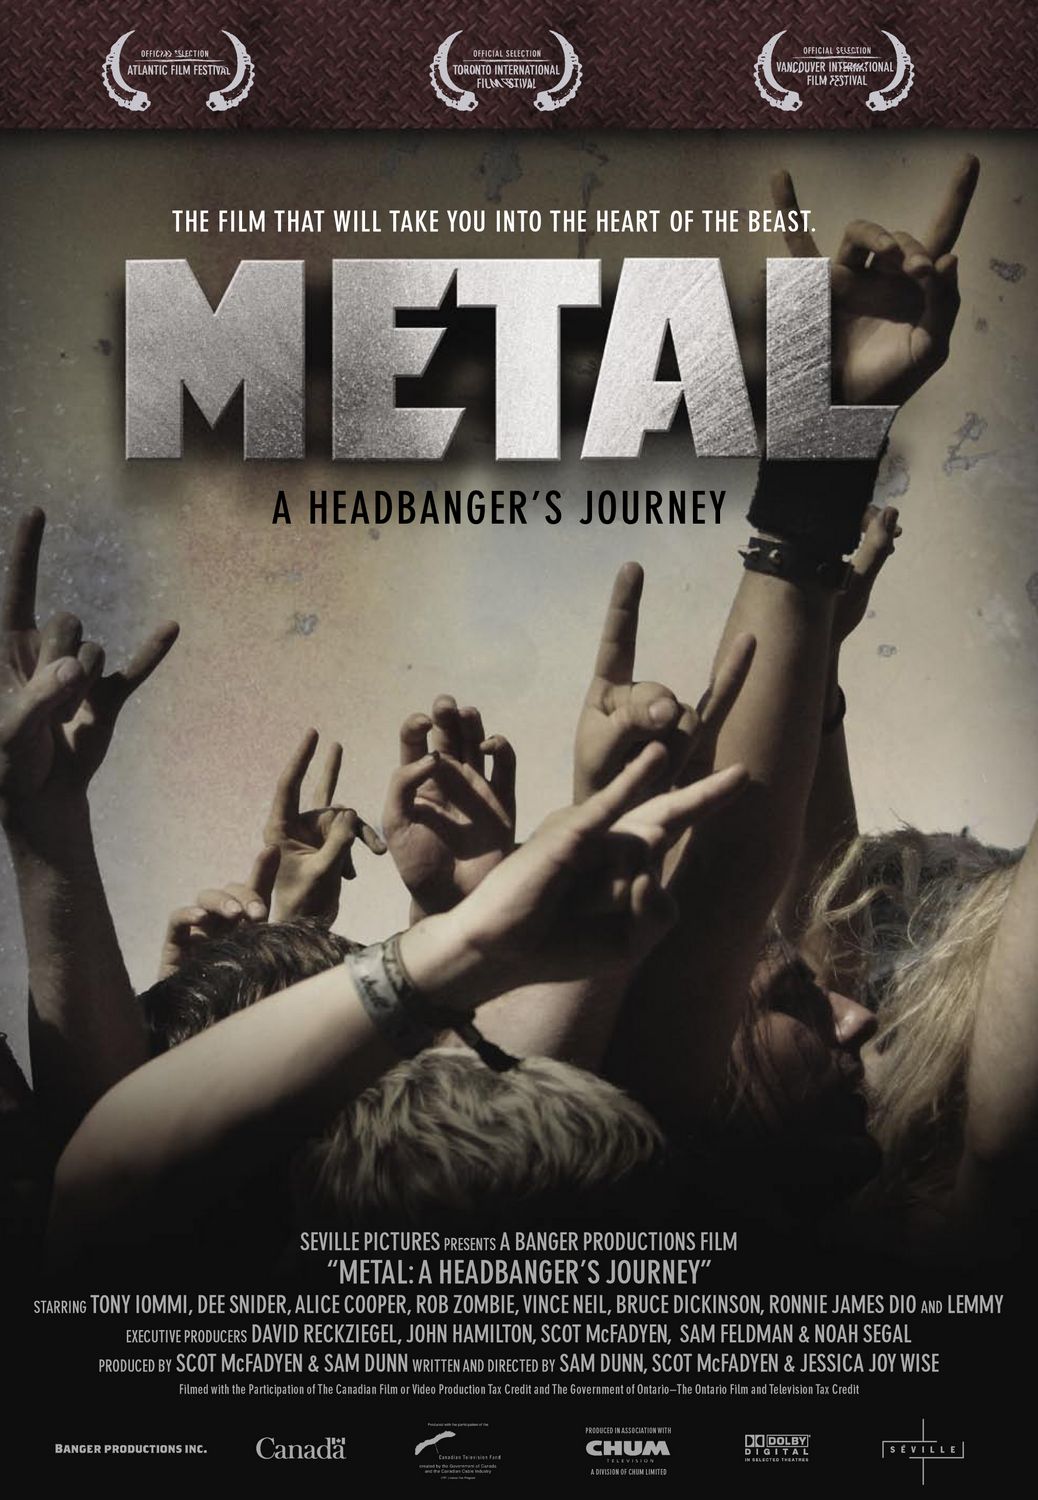 Nonton film Metal: A Headbangers Journey layarkaca21 indoxx1 ganool online streaming terbaru